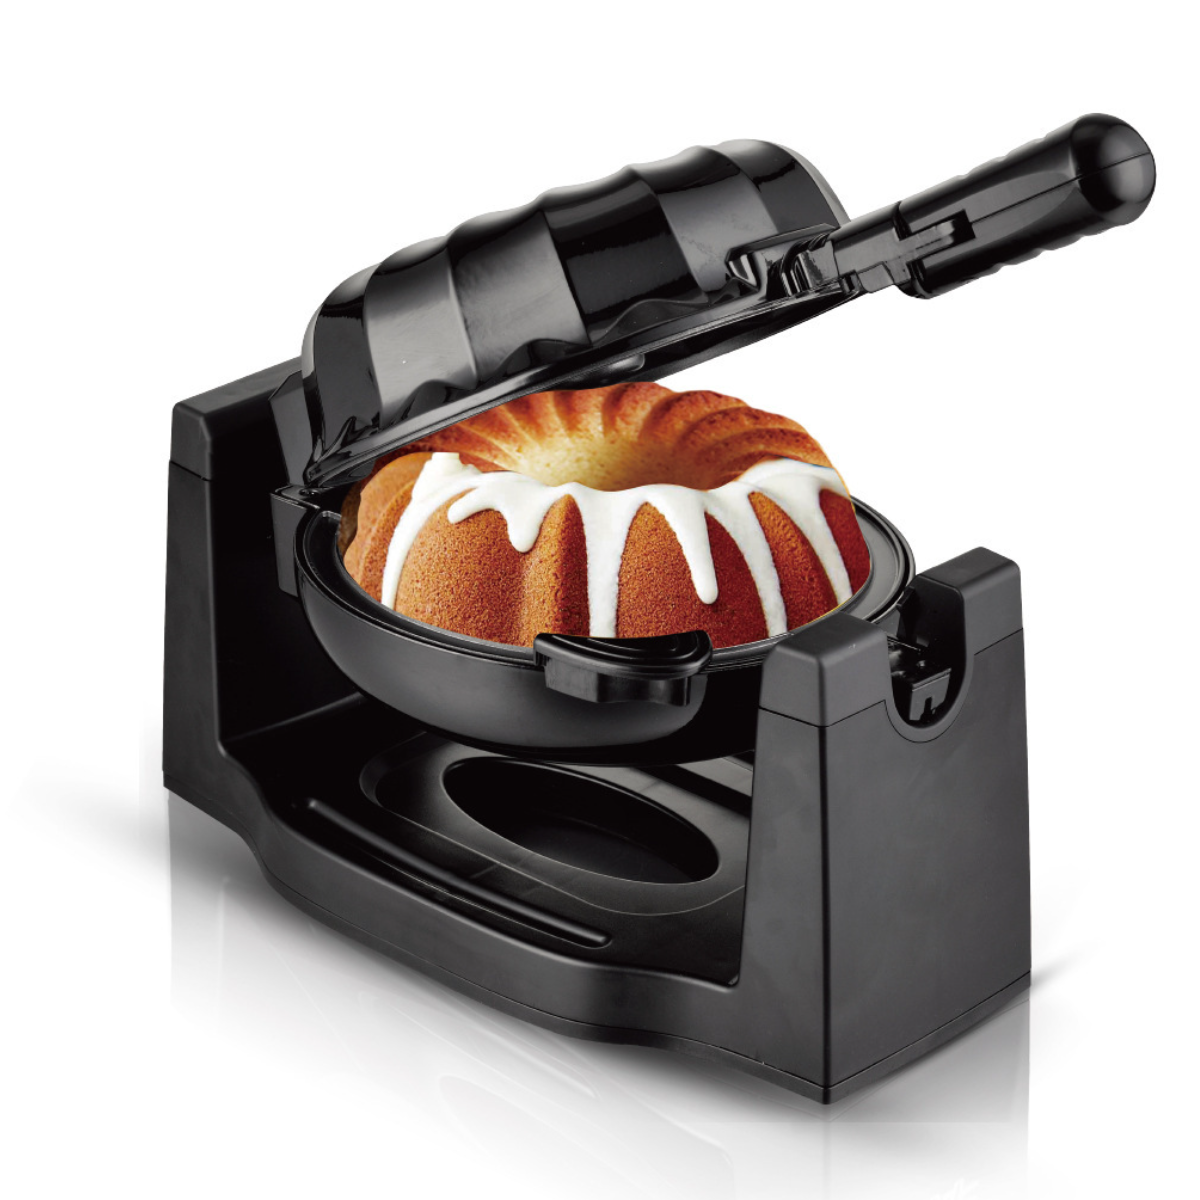 1800 Schlitze: W-Schwarz: Gleichmäßige zu Erwärmung, Flip-Cake-Maschine leicht UWOT Schwarz reinigen, Antihaftbeschichtung (899 Guglhupfbäcker 1) Watt,